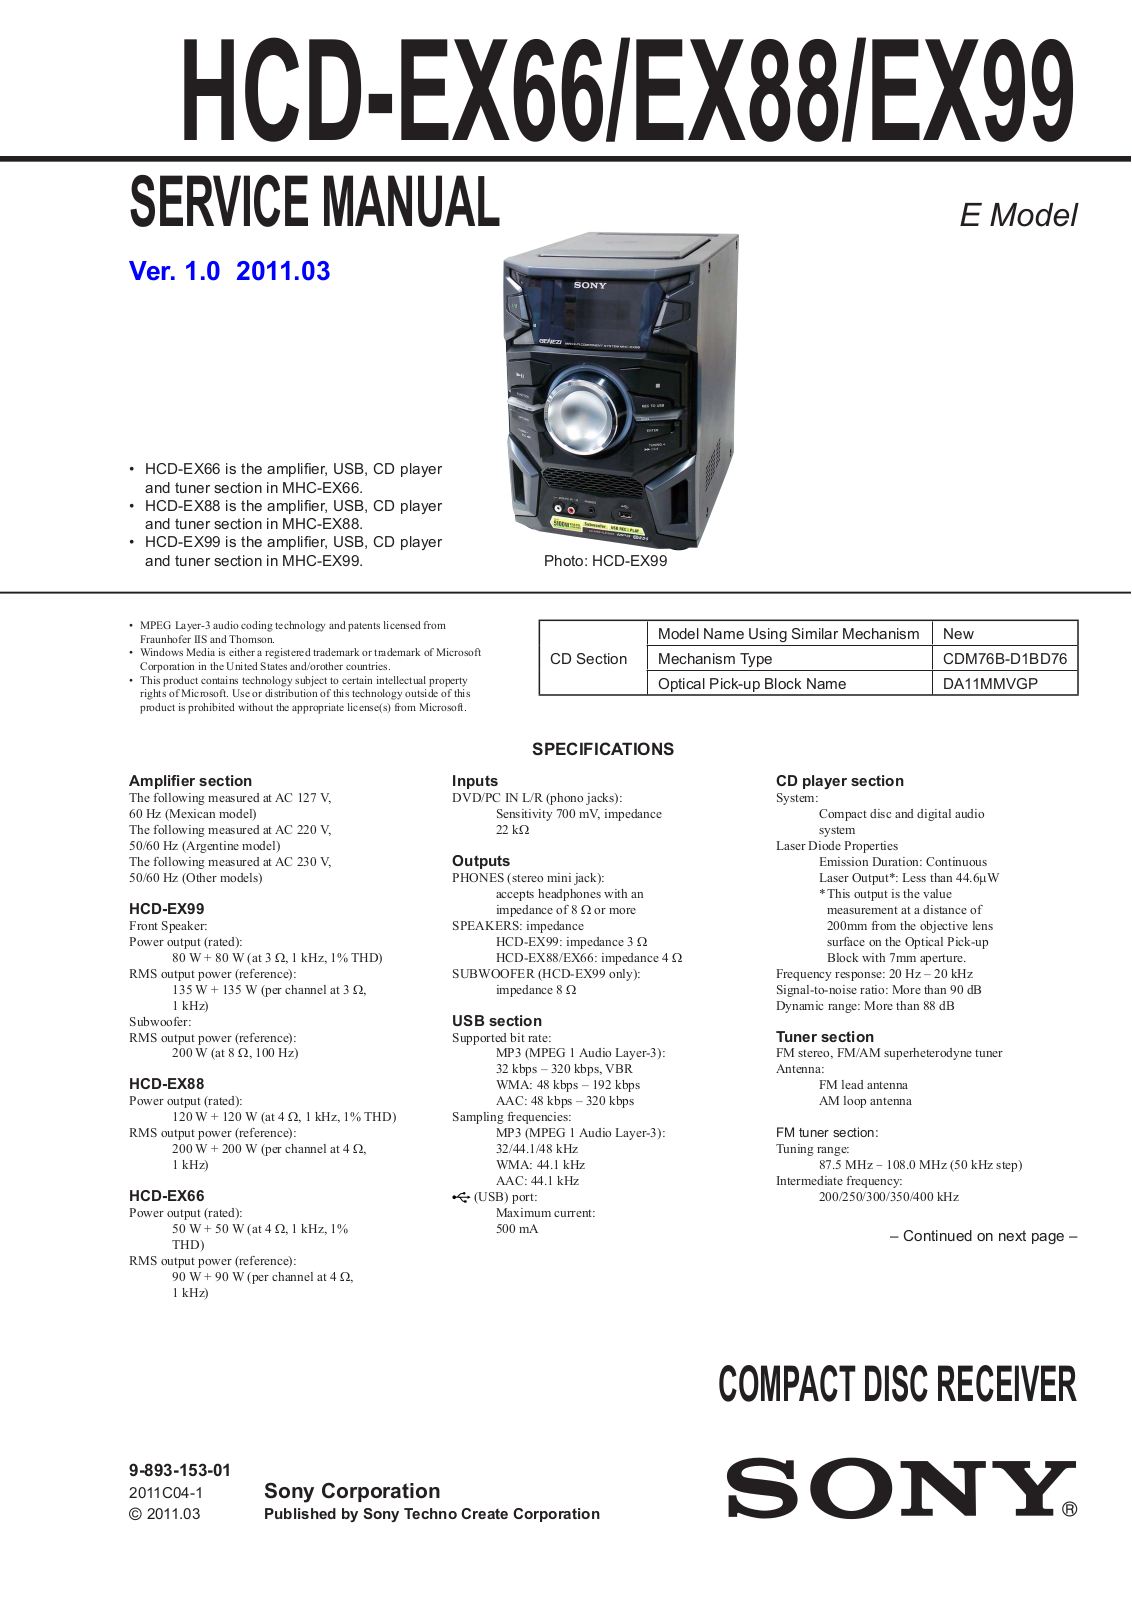 Sony HCD-EX66, HCD-EX88, HCD-EX99 Service Manual